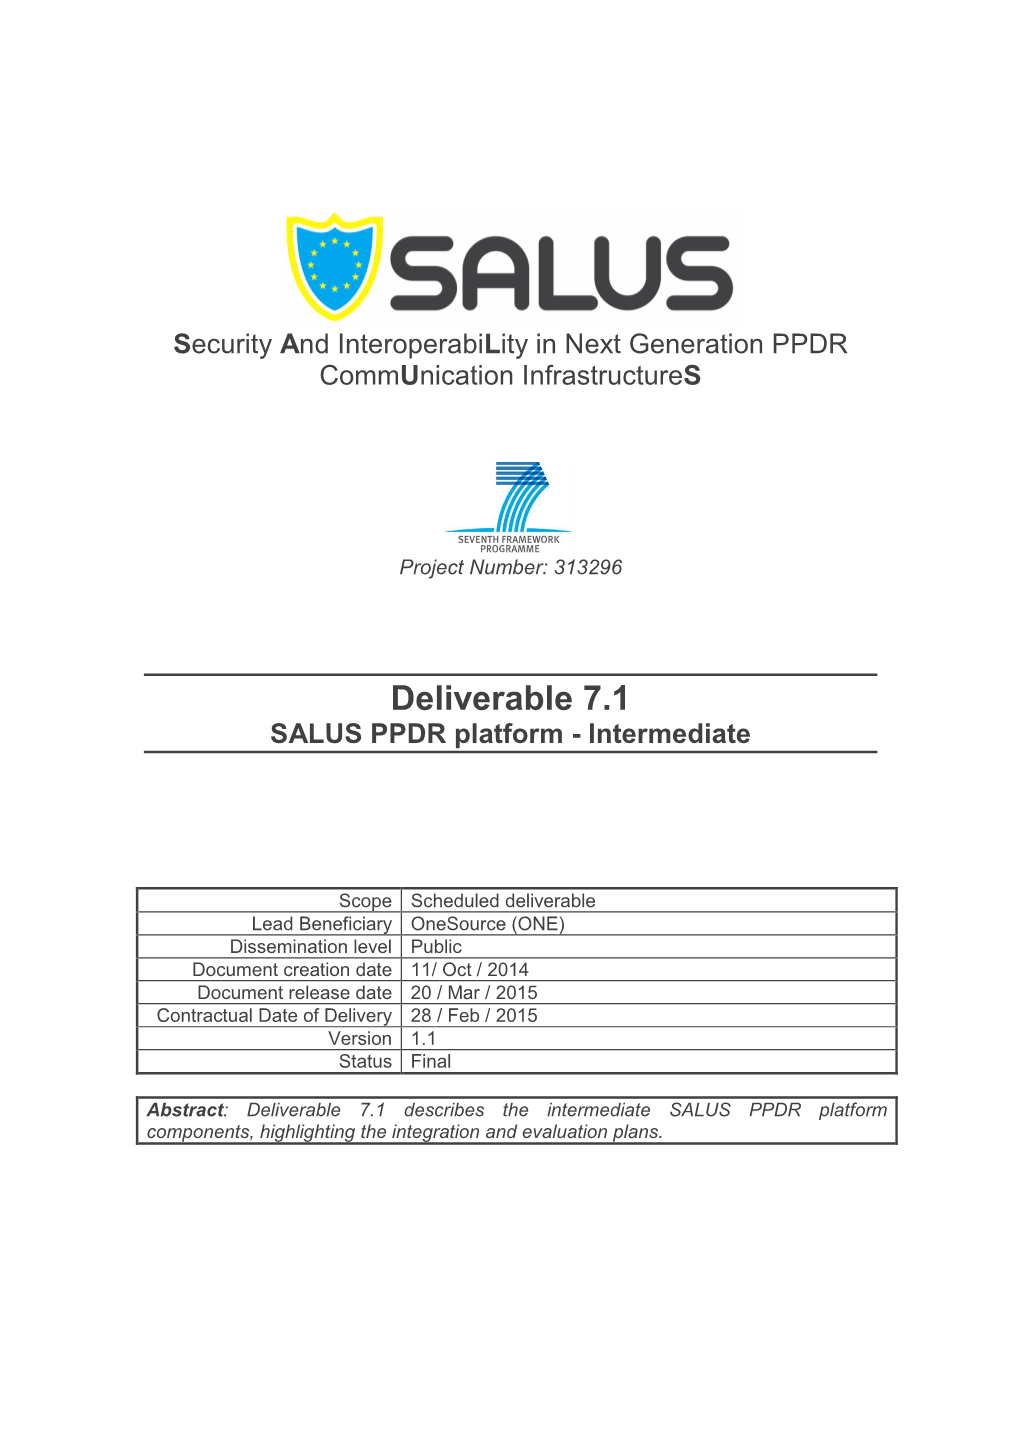 SALUS PPDR Platform - Intermediate